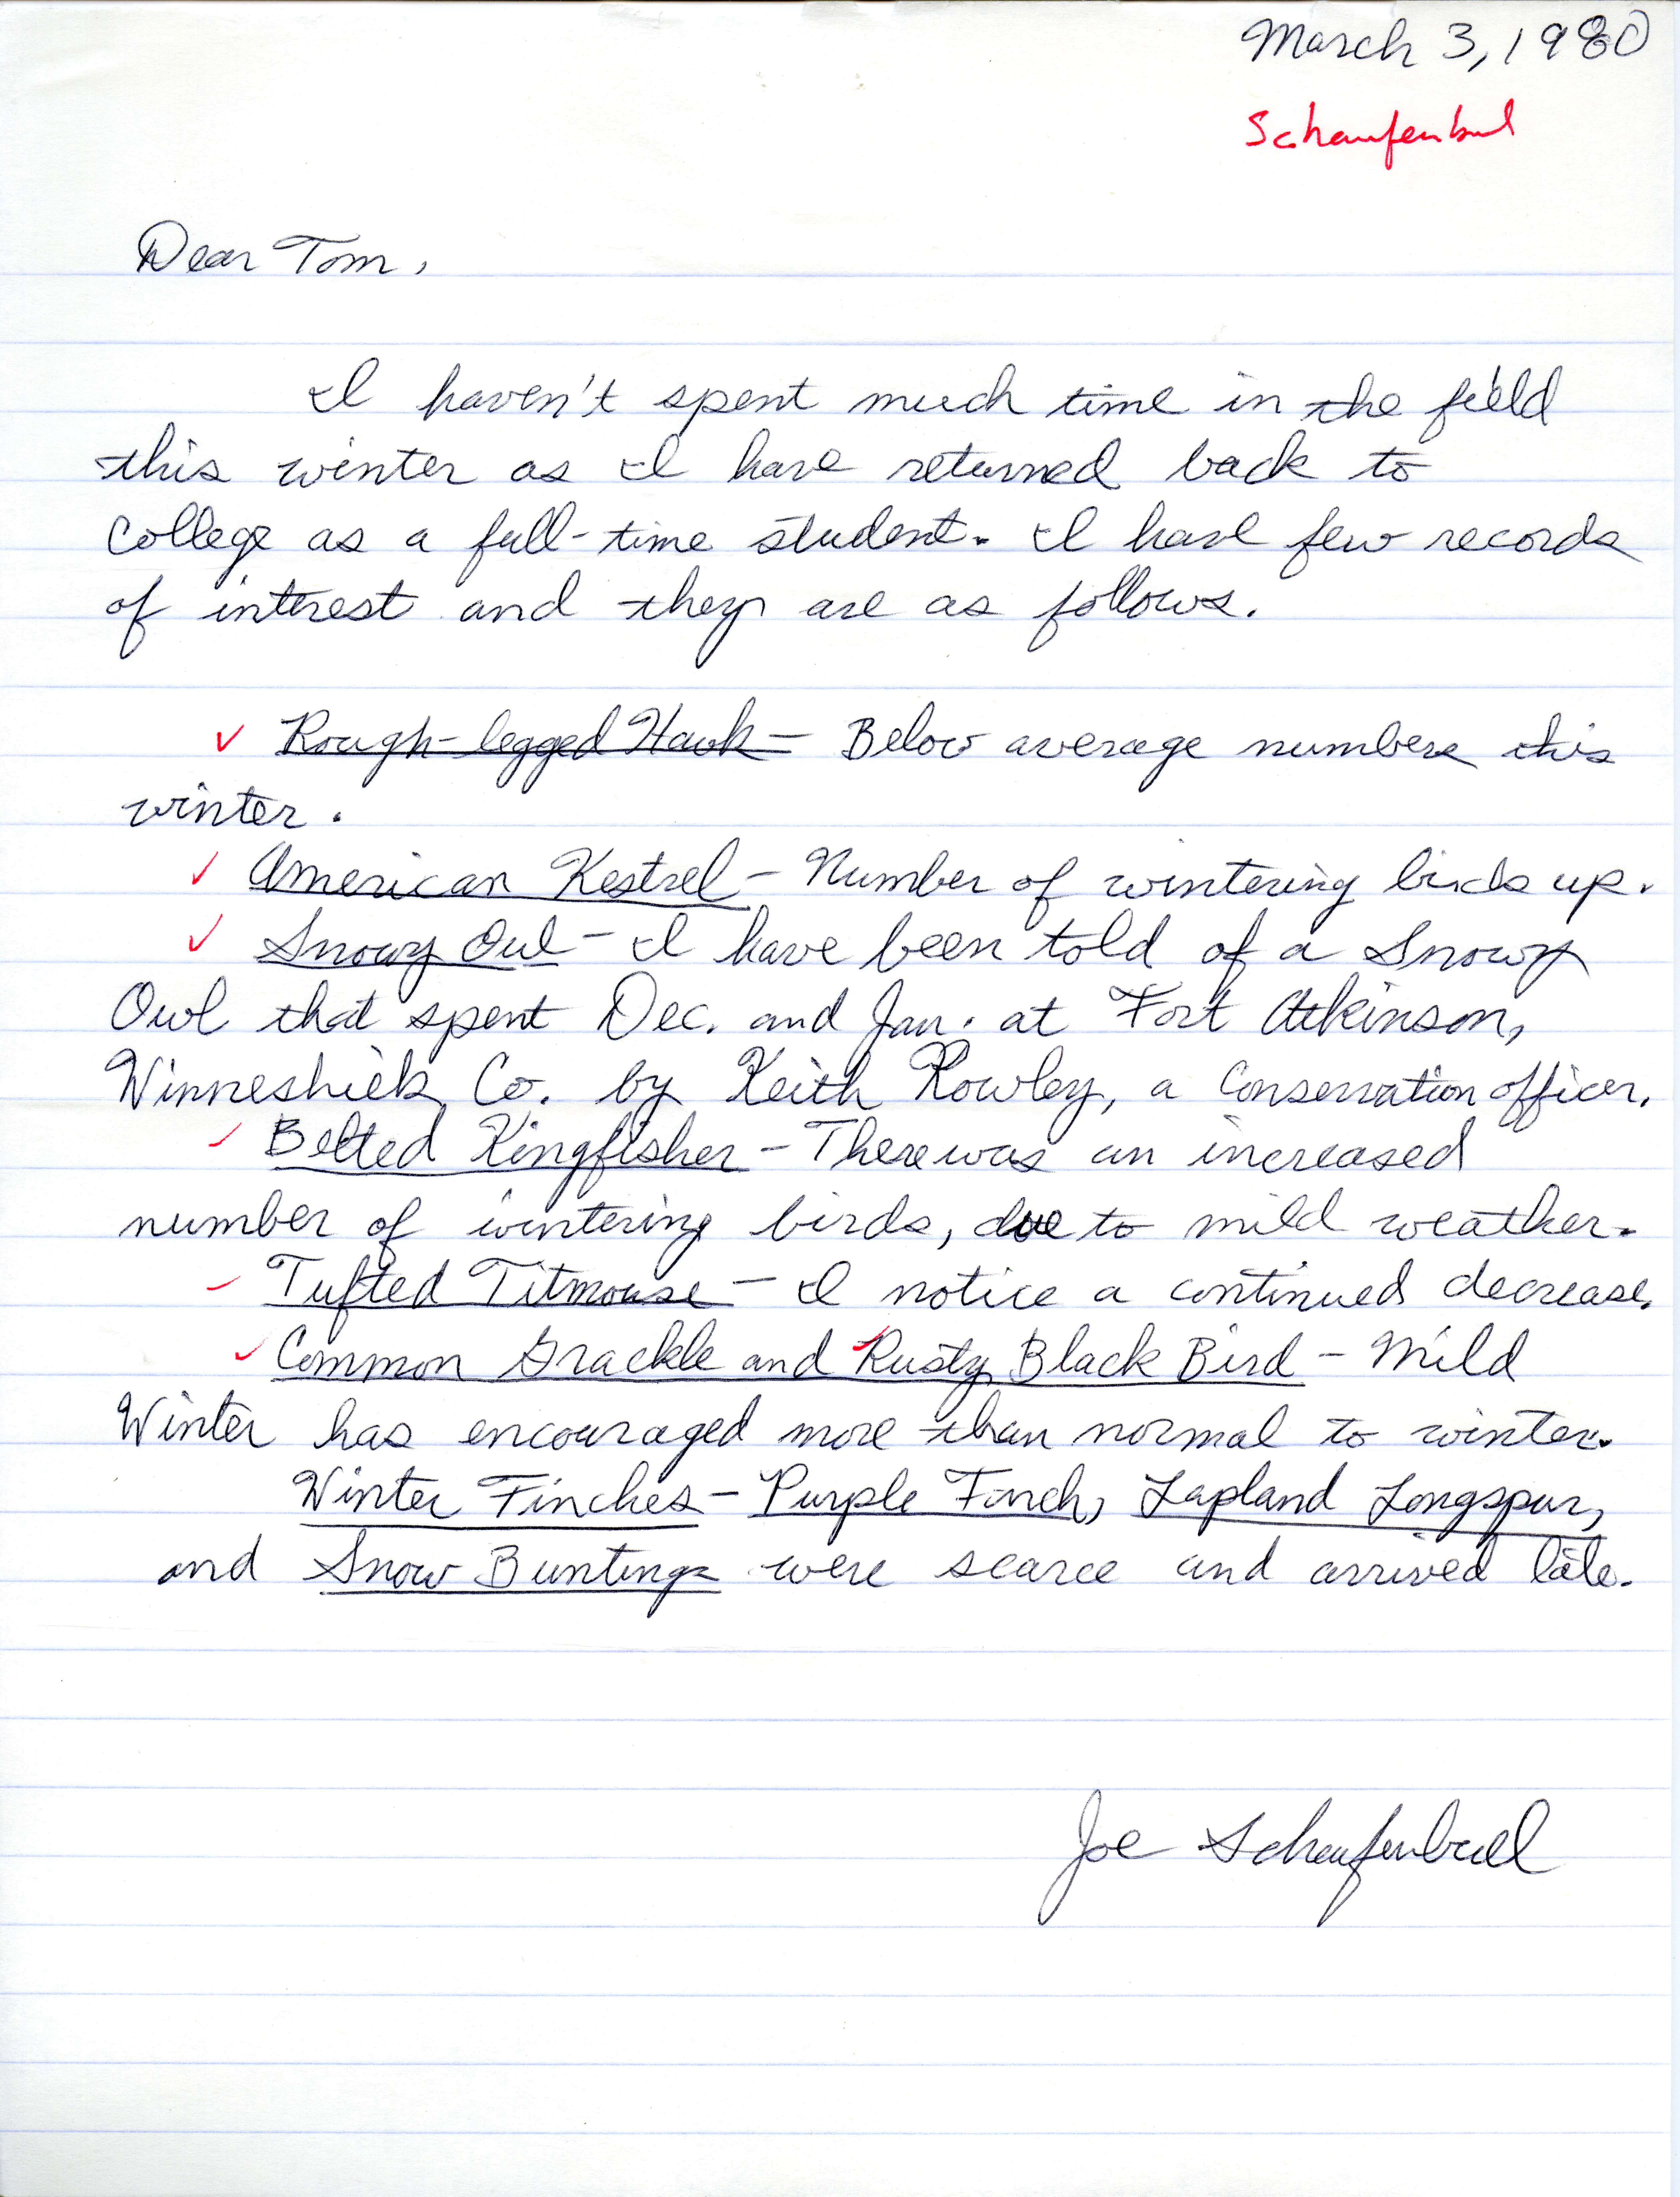 Joseph P. Schaufenbuel letter to Thomas H. Kent regarding bird sightings, March 3, 1980